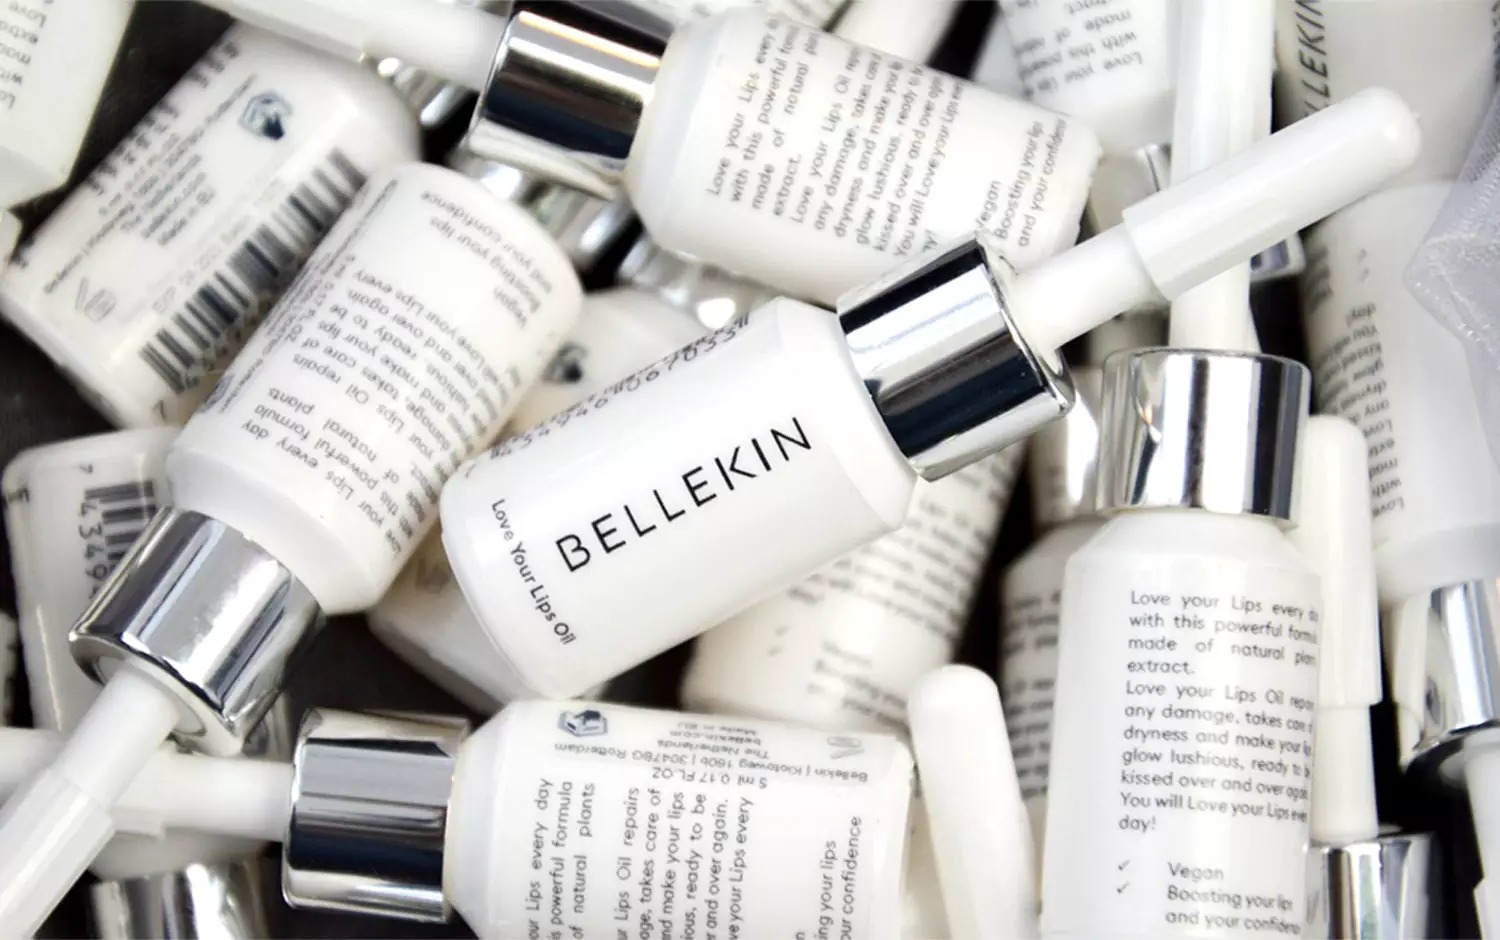 Bellekin护肤产品包装设计